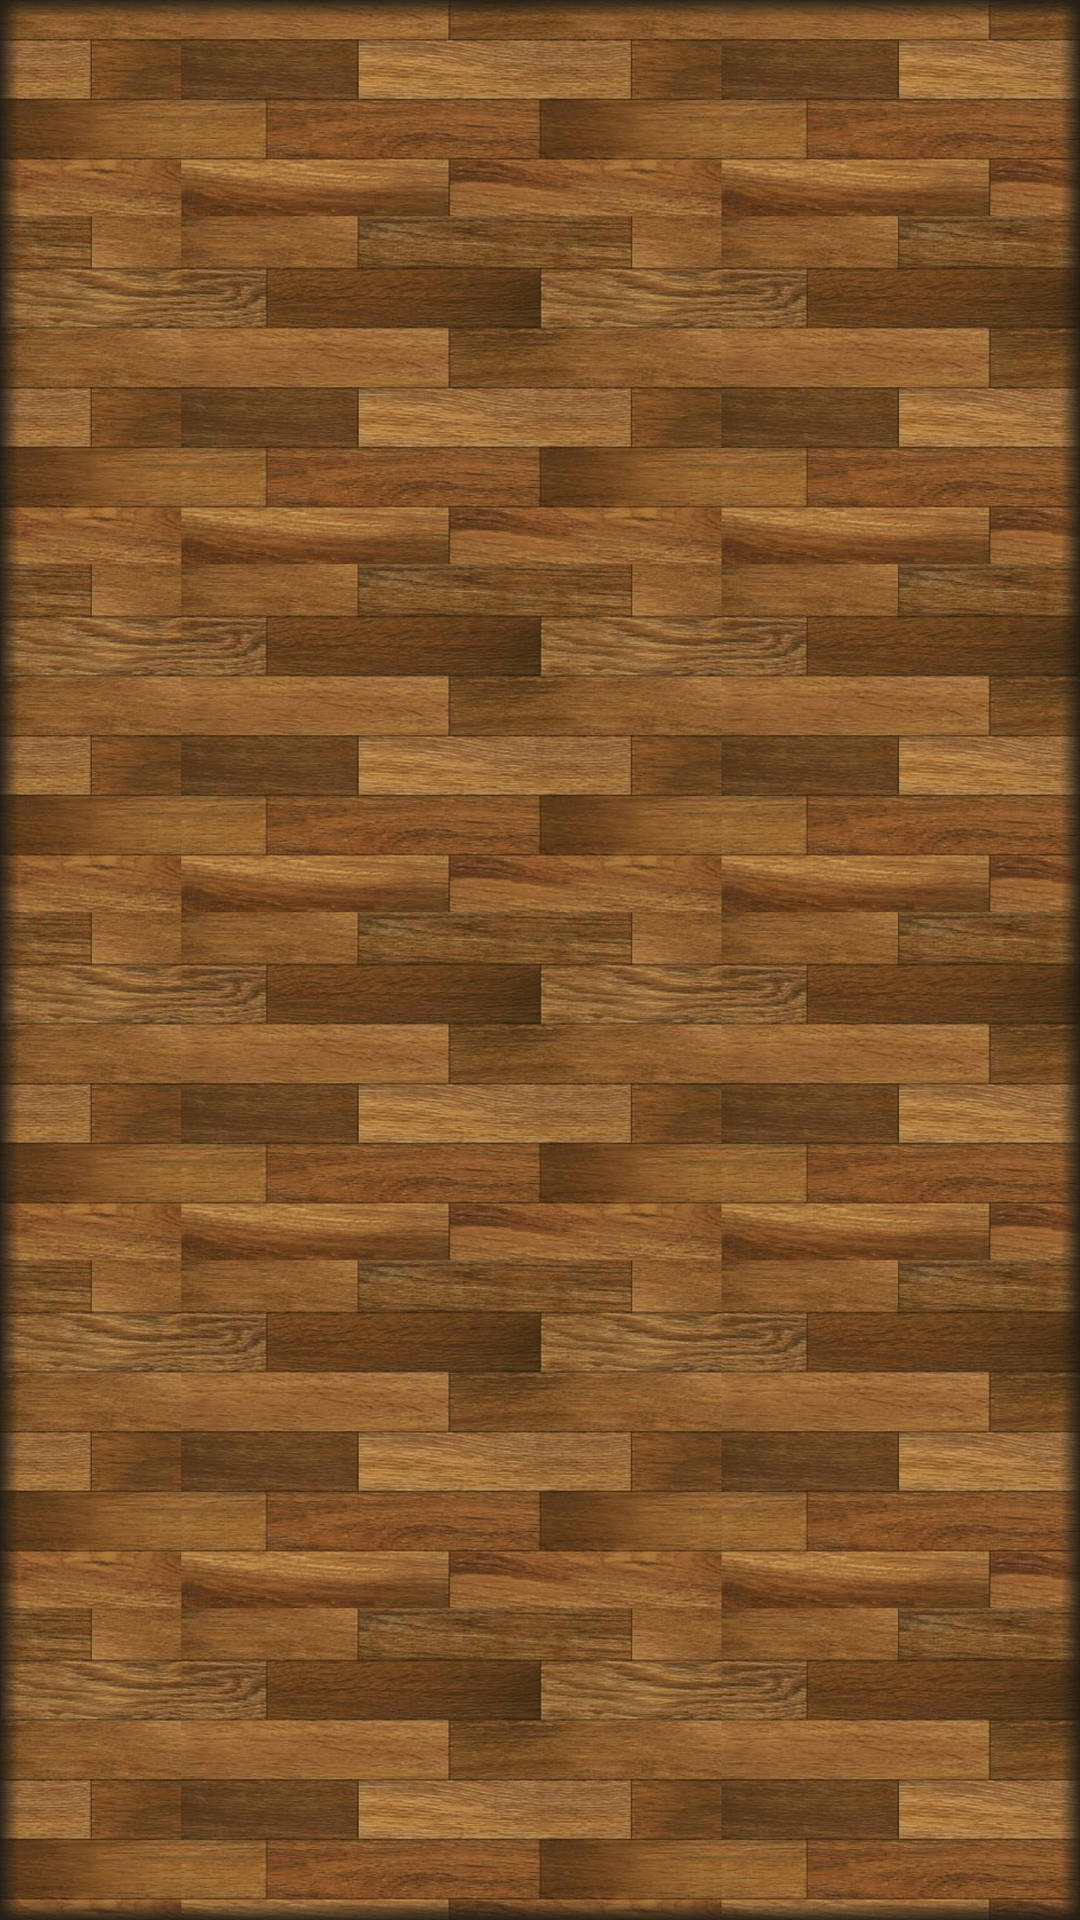 Samsung A51 Wooden Floor Panels Background